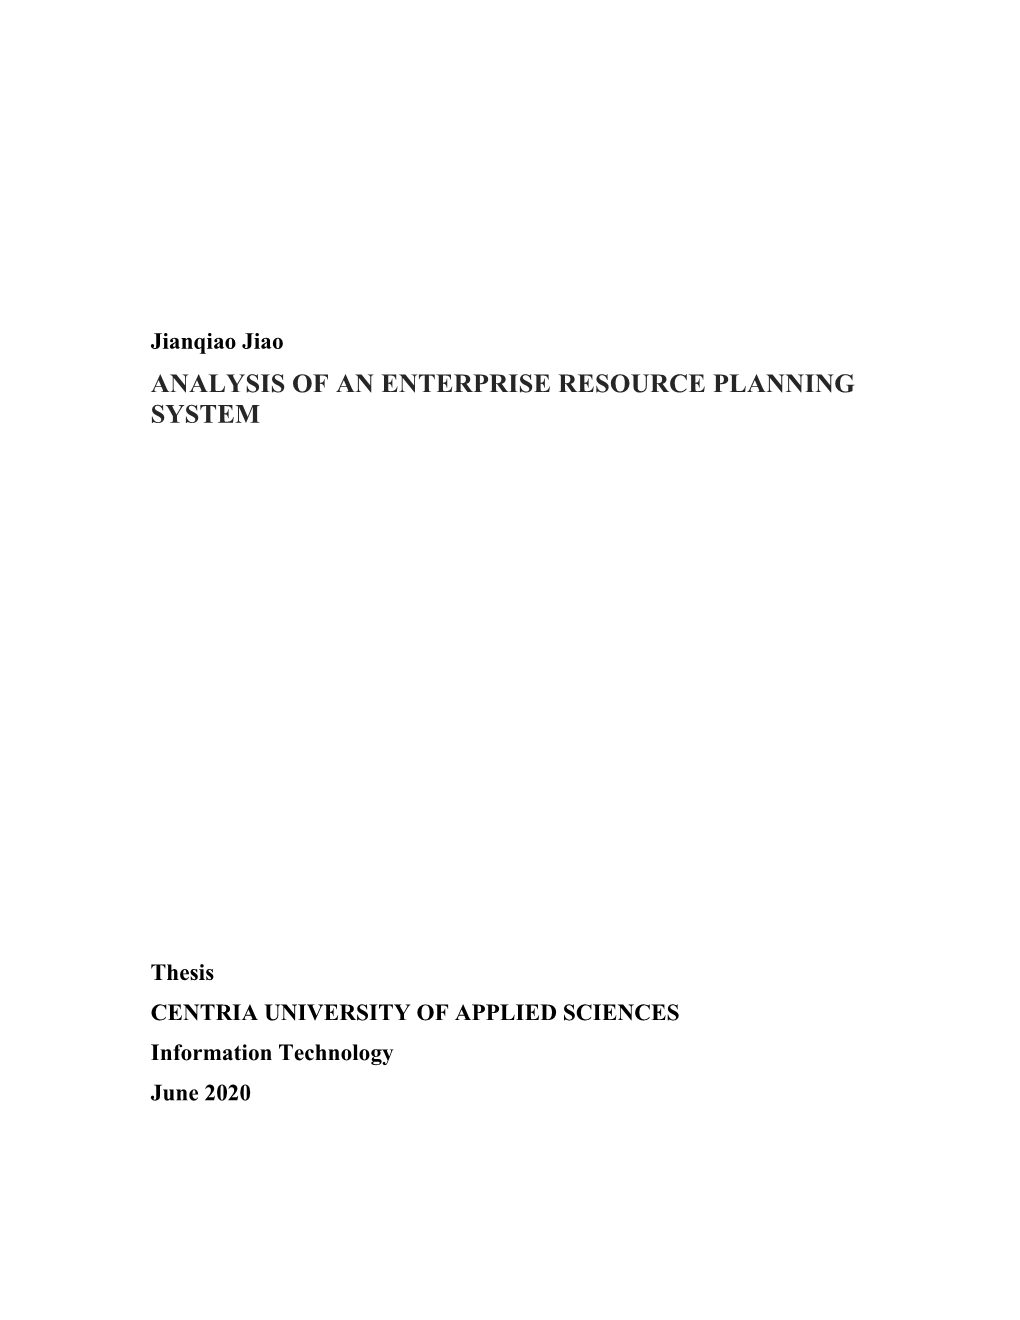 Analysis of an Enterprise Resource Planning System